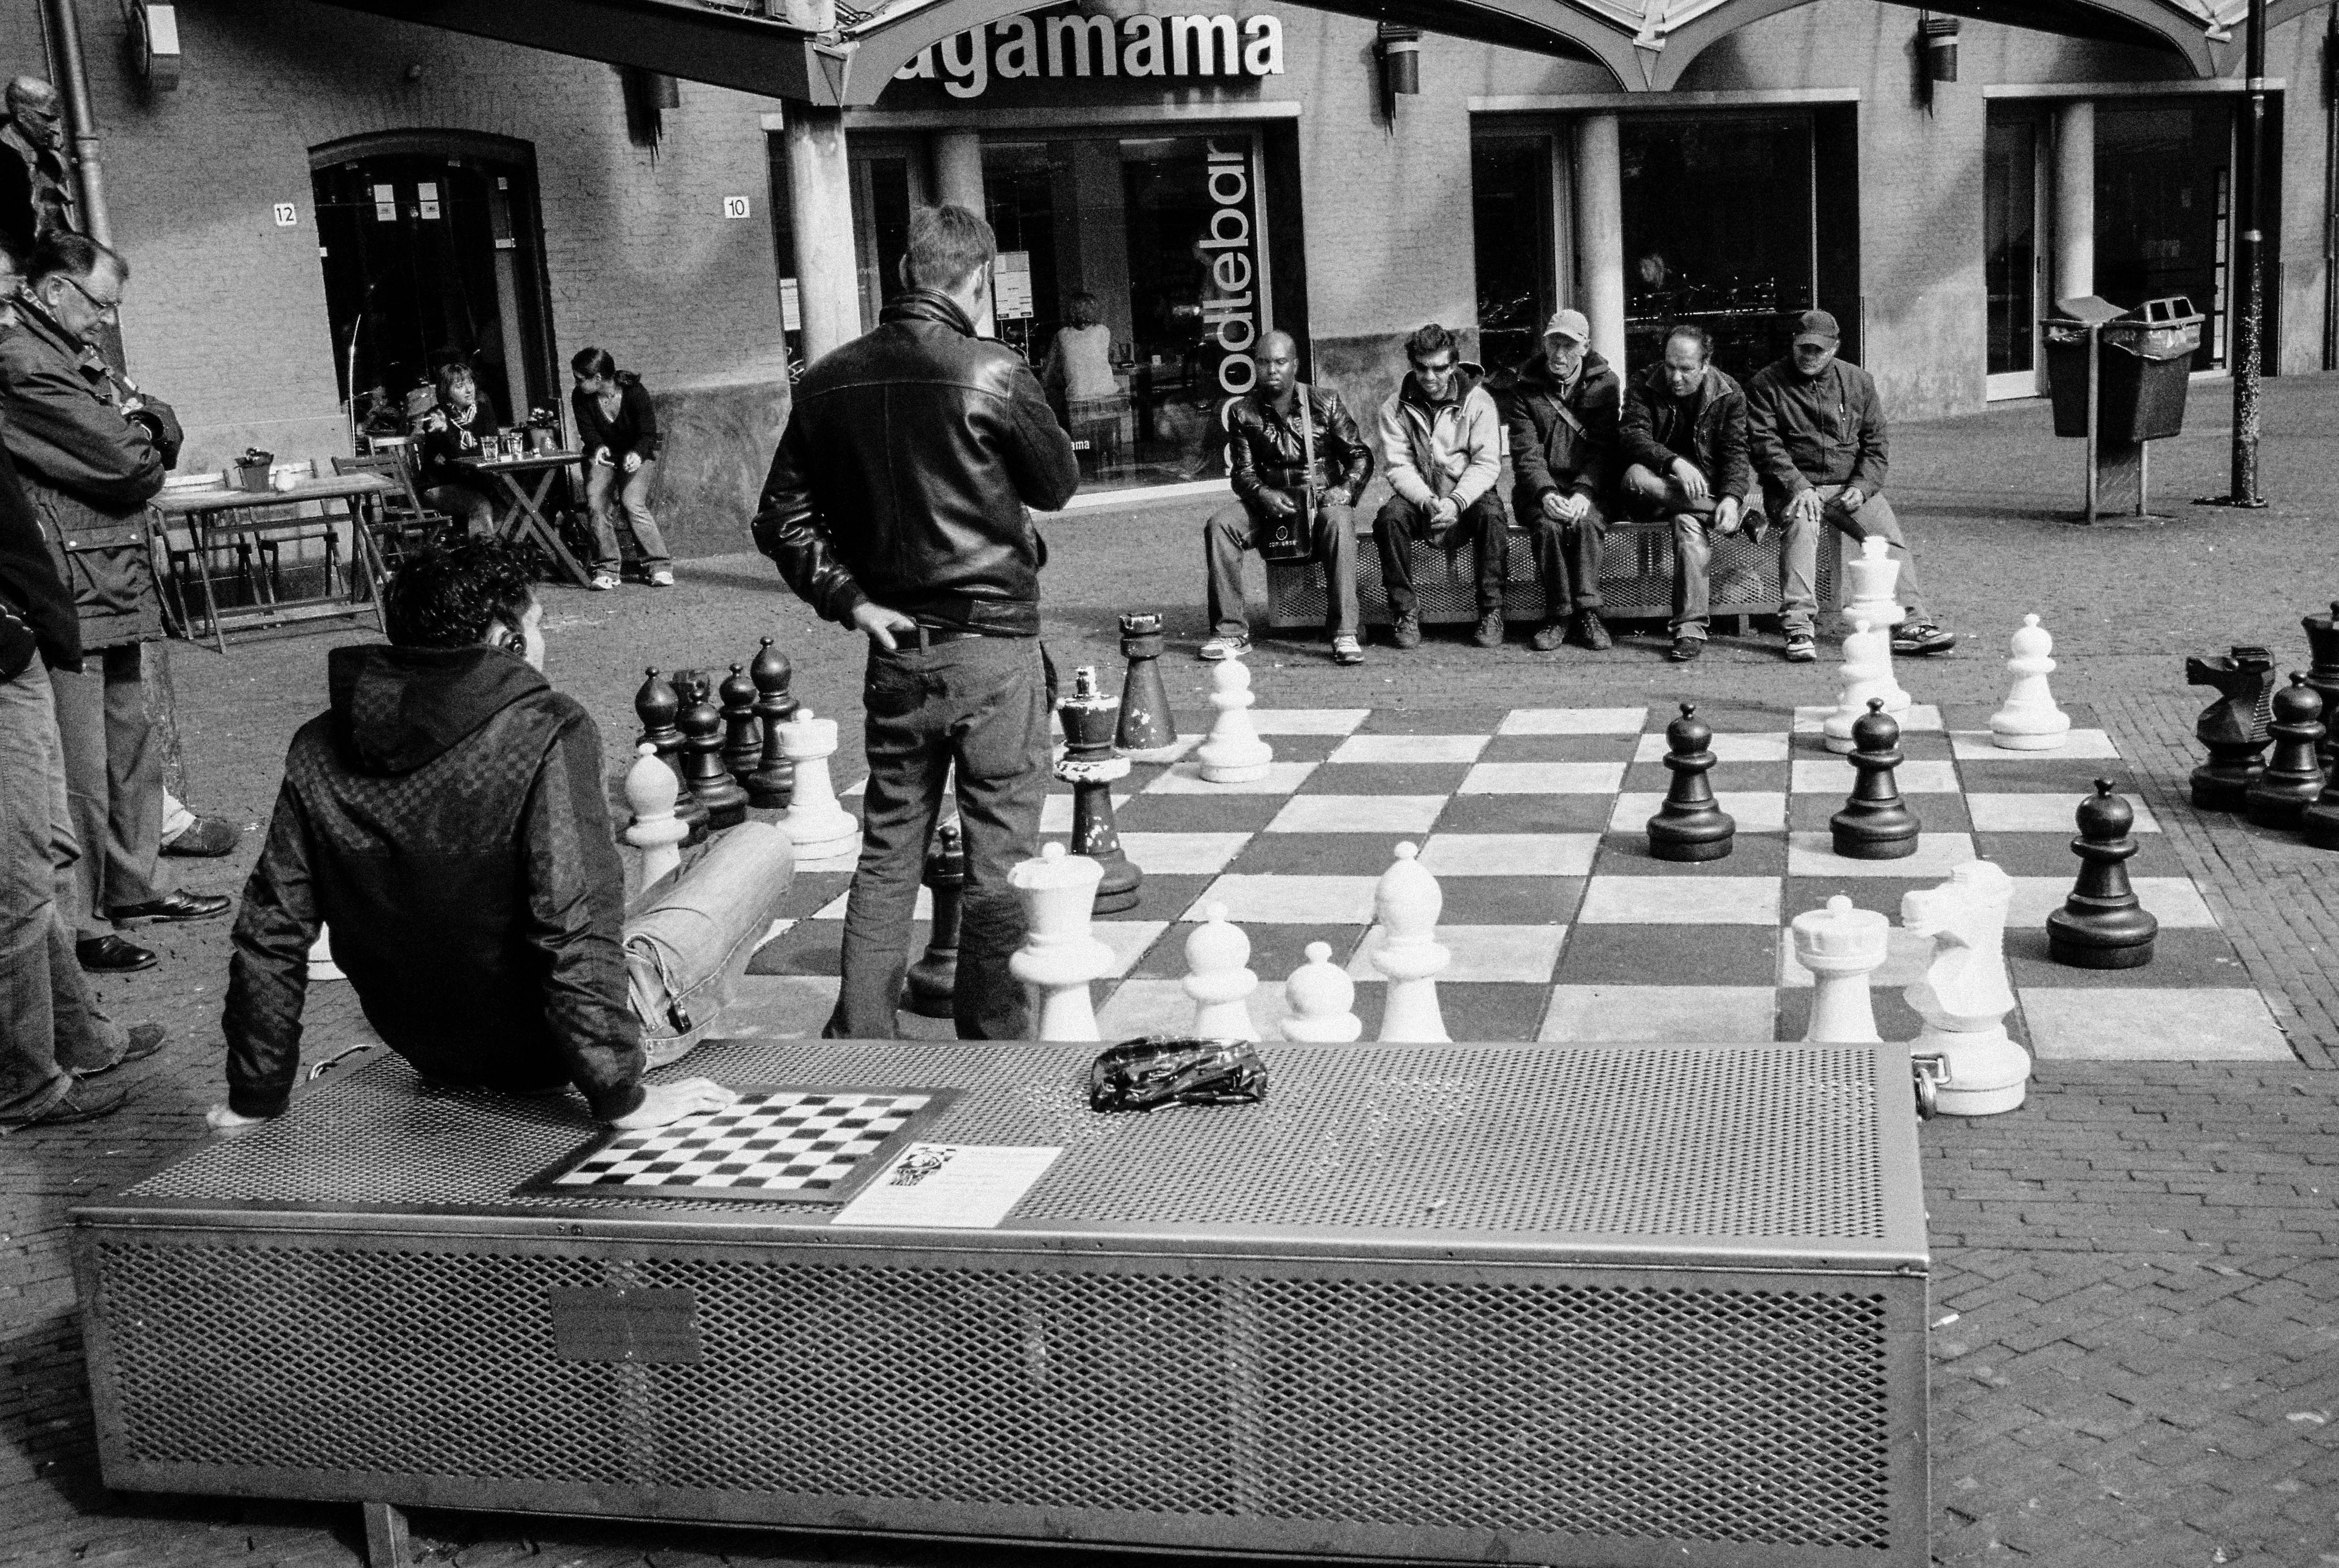 Anand vs Carlsen match will revive chess: Kasparov